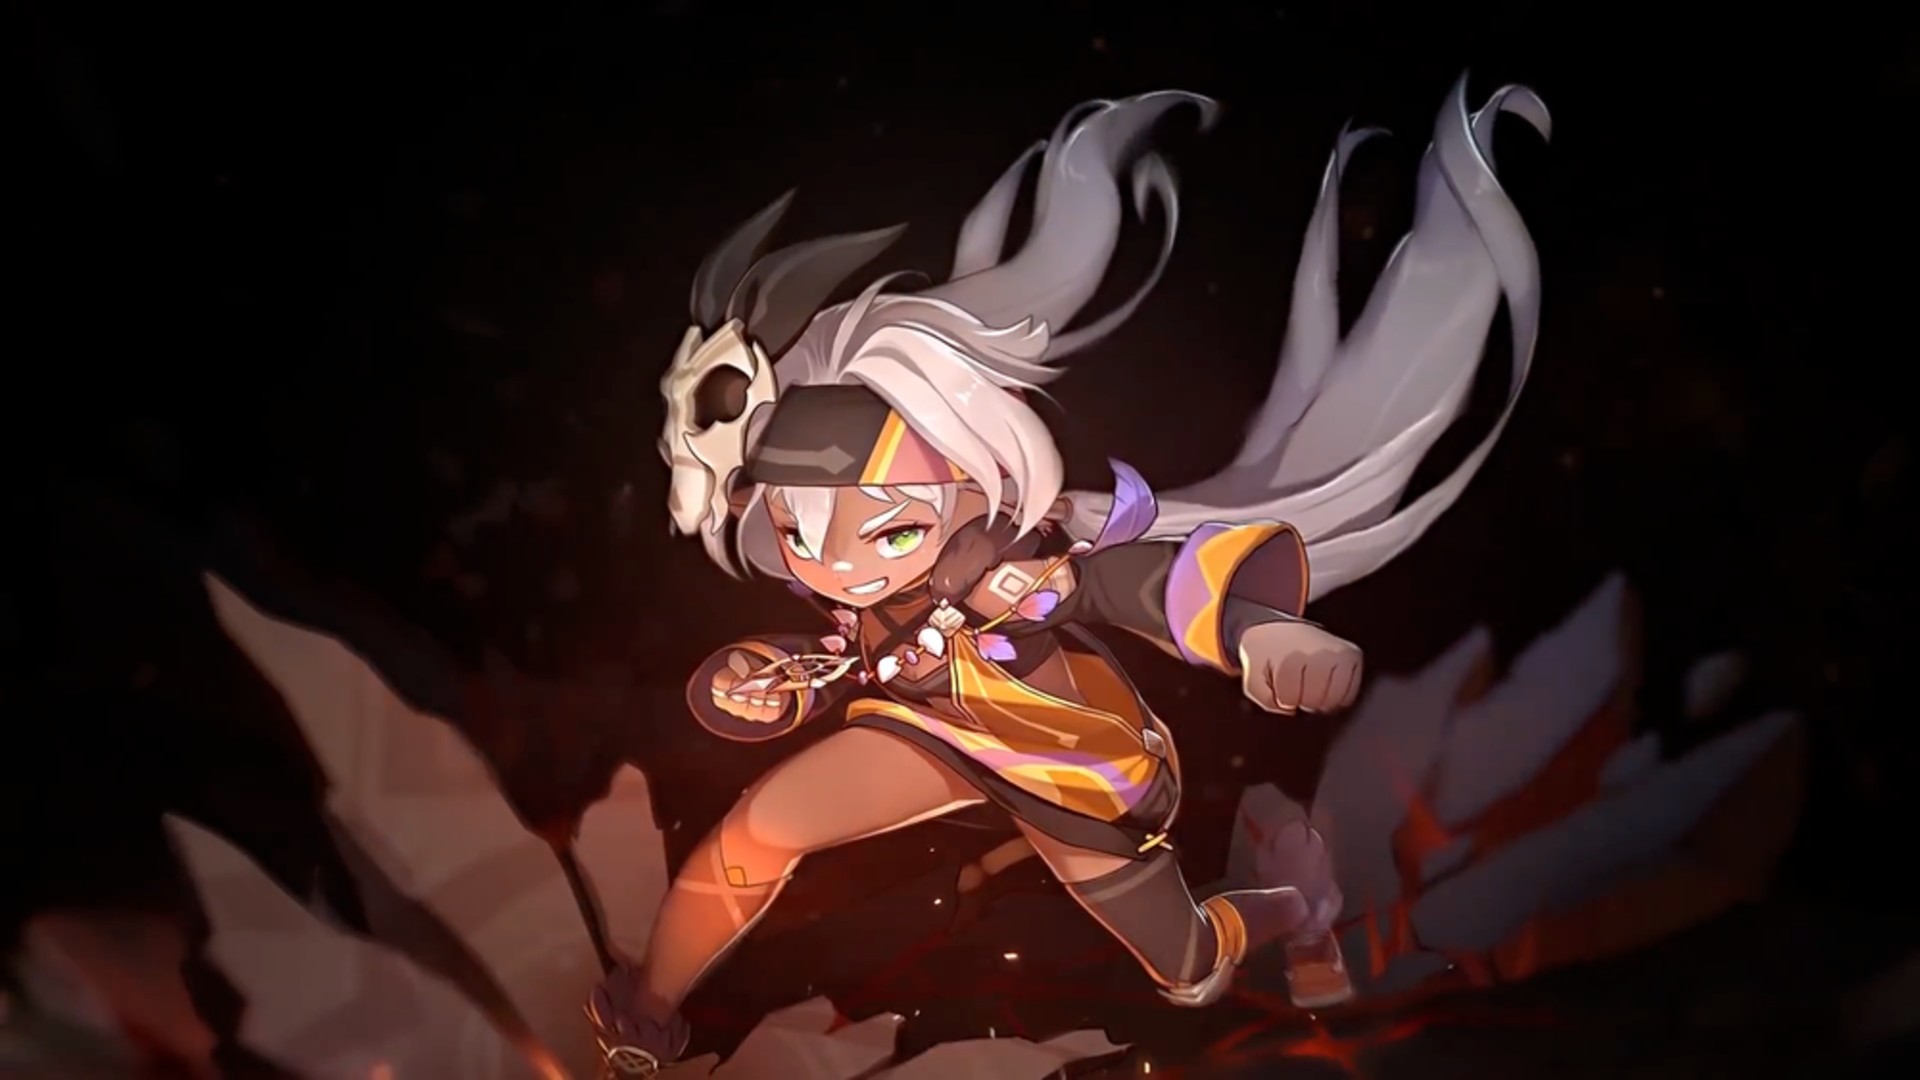 Potential upcoming Genshin Impact character Iansan wearing animal skulls and summoning flame